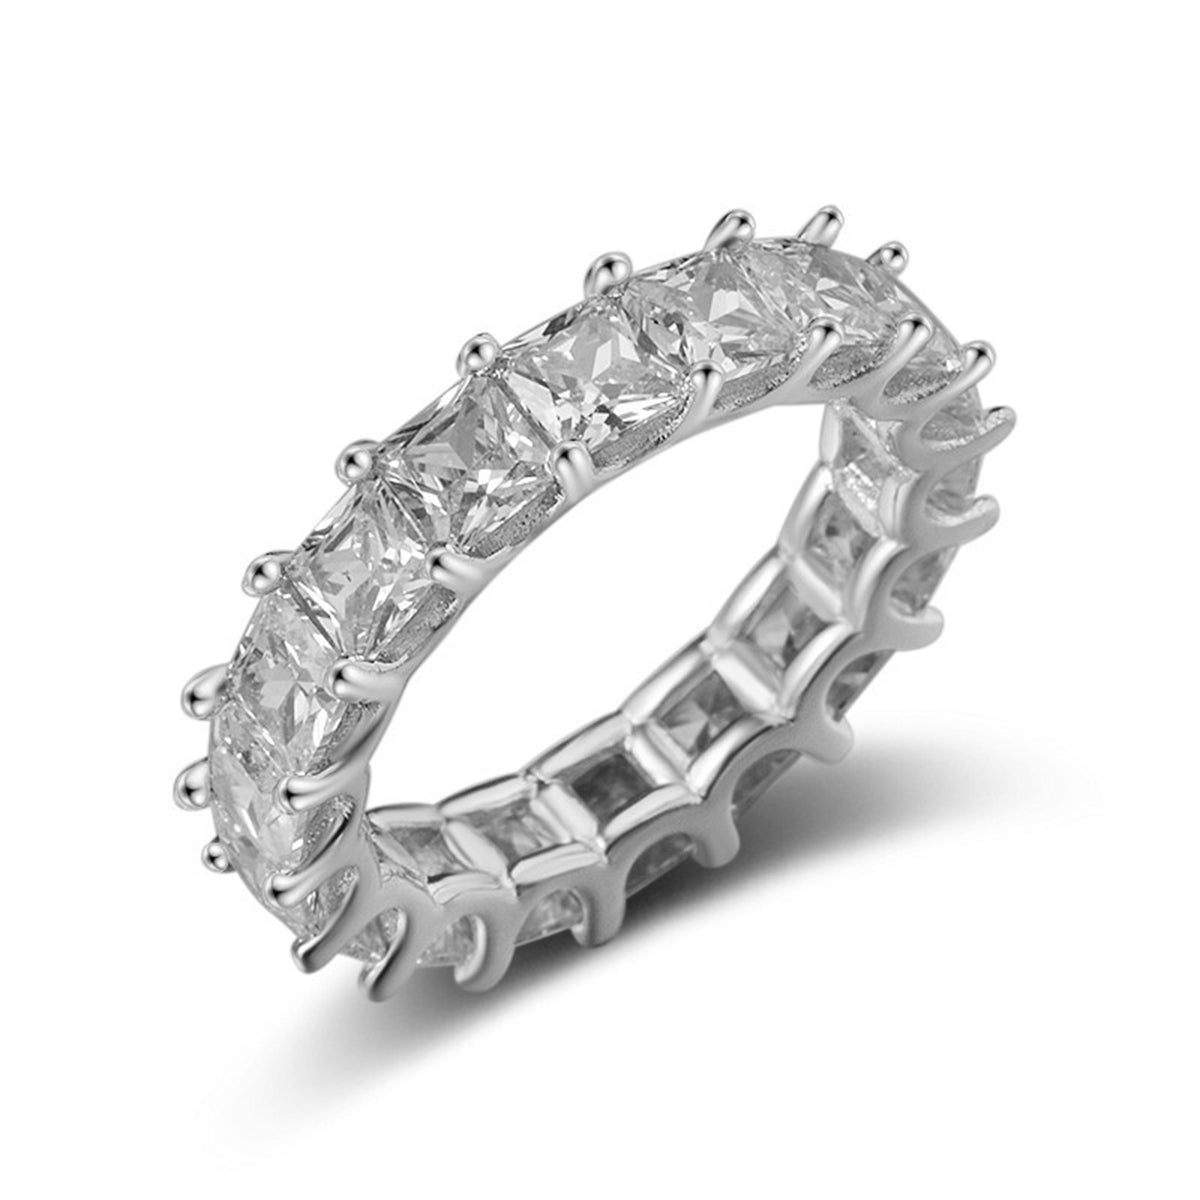 Crystal & Silver-Plated Princess-Cut Ring